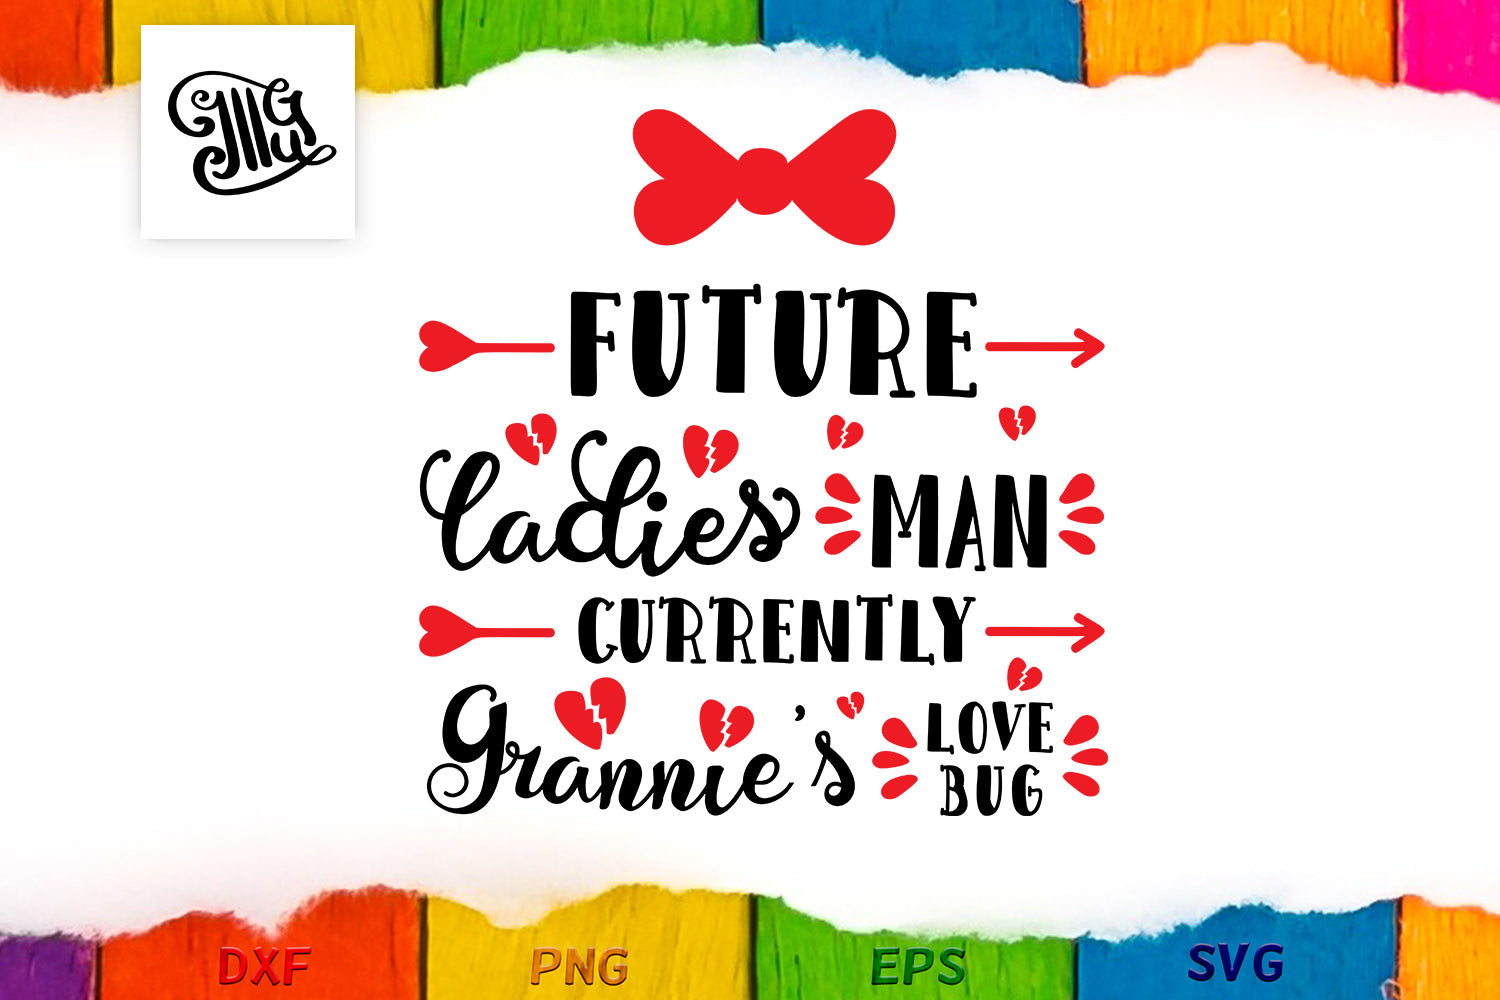 Download Future ladies man currently grannie's love bug svg ...